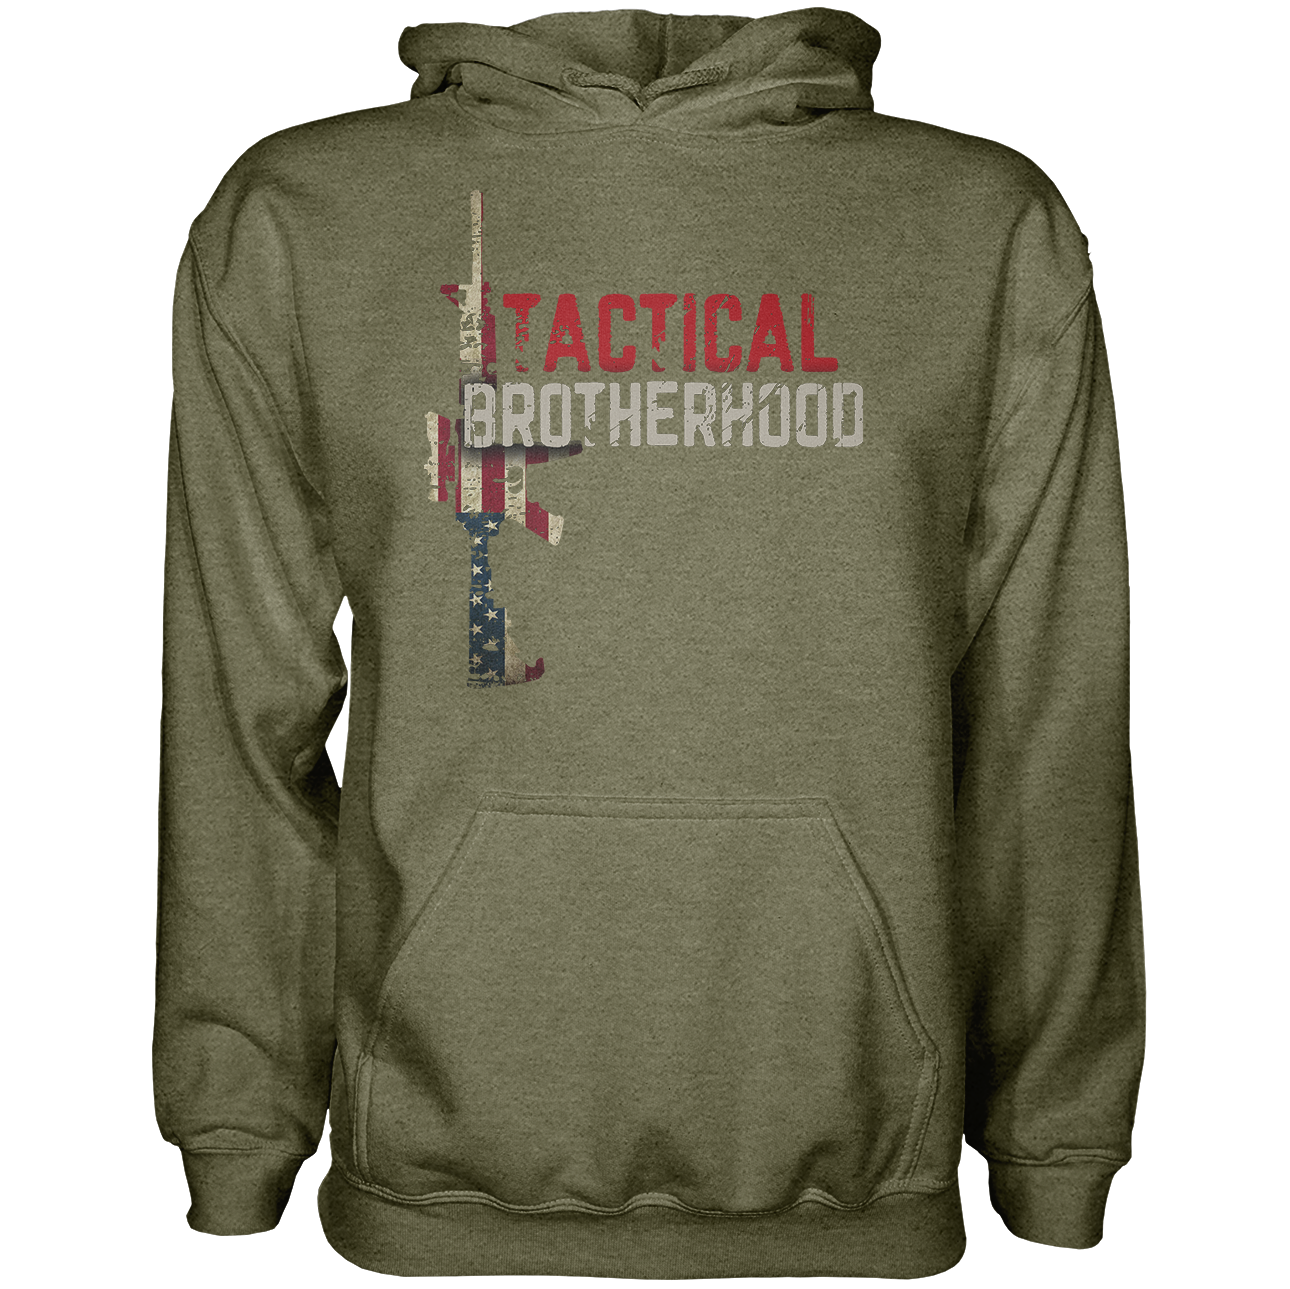 OG Tactical Brotherhood Official Hoodie